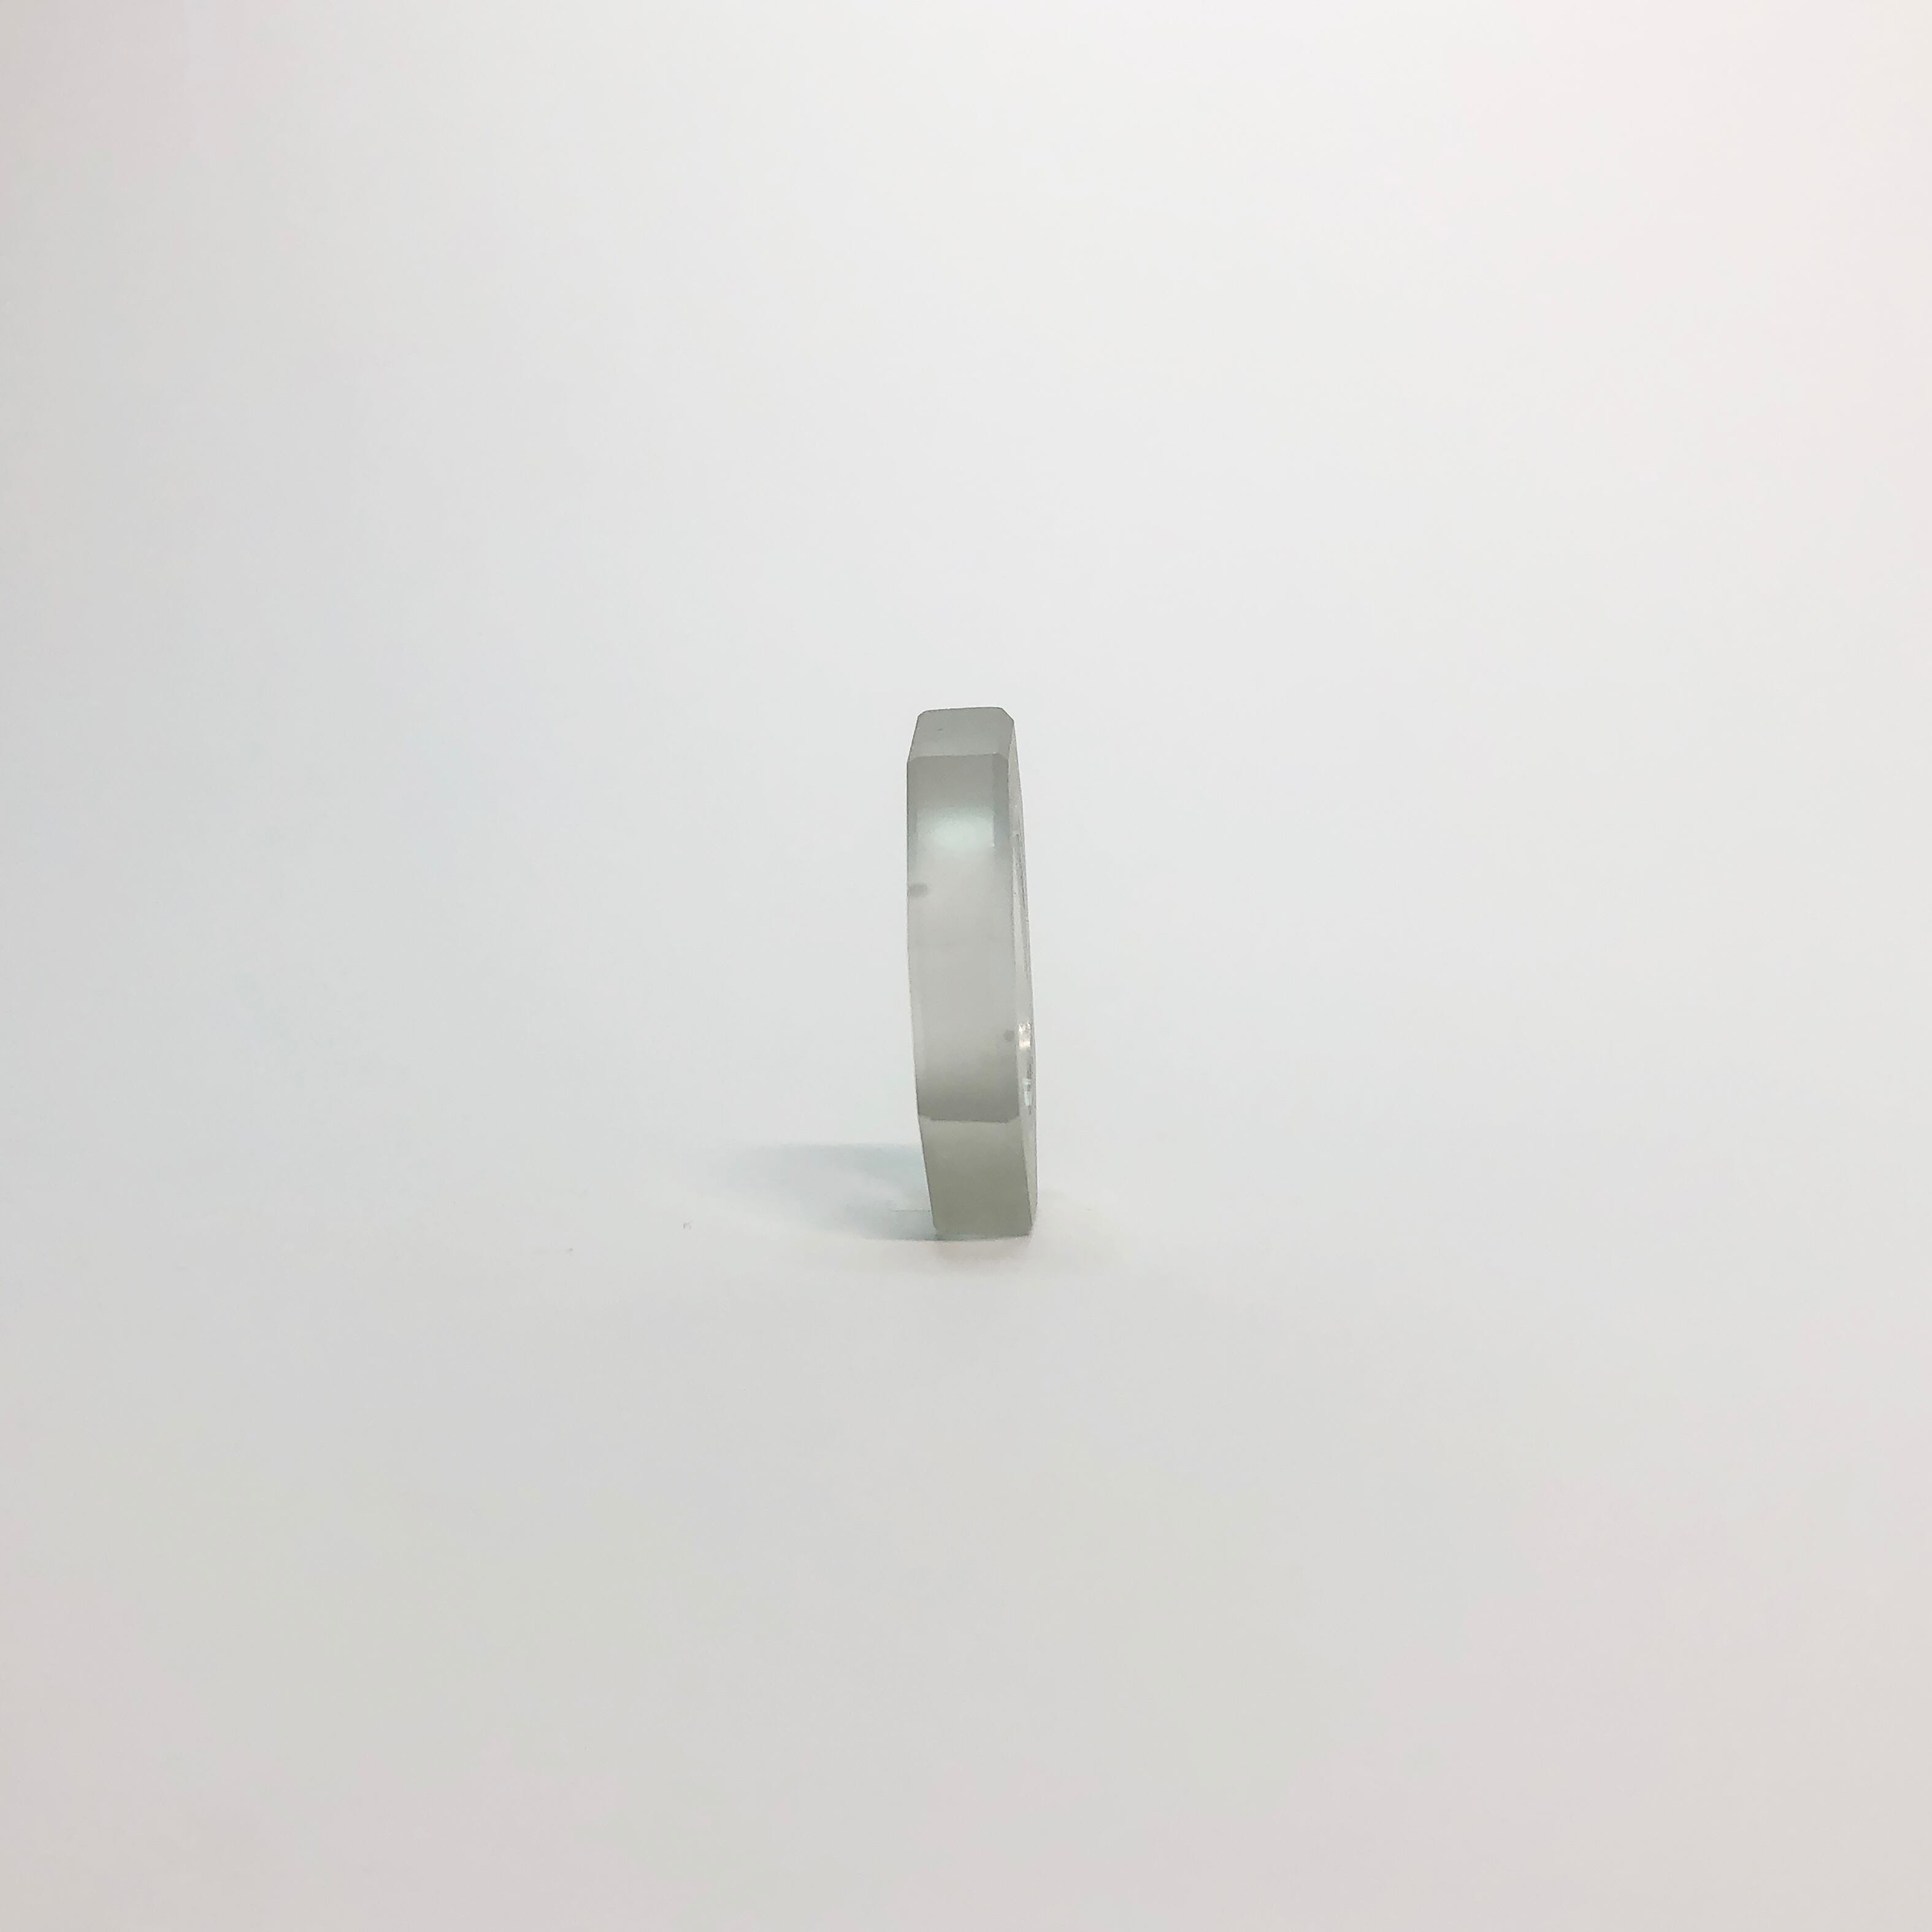 SELF - glass ring - 05